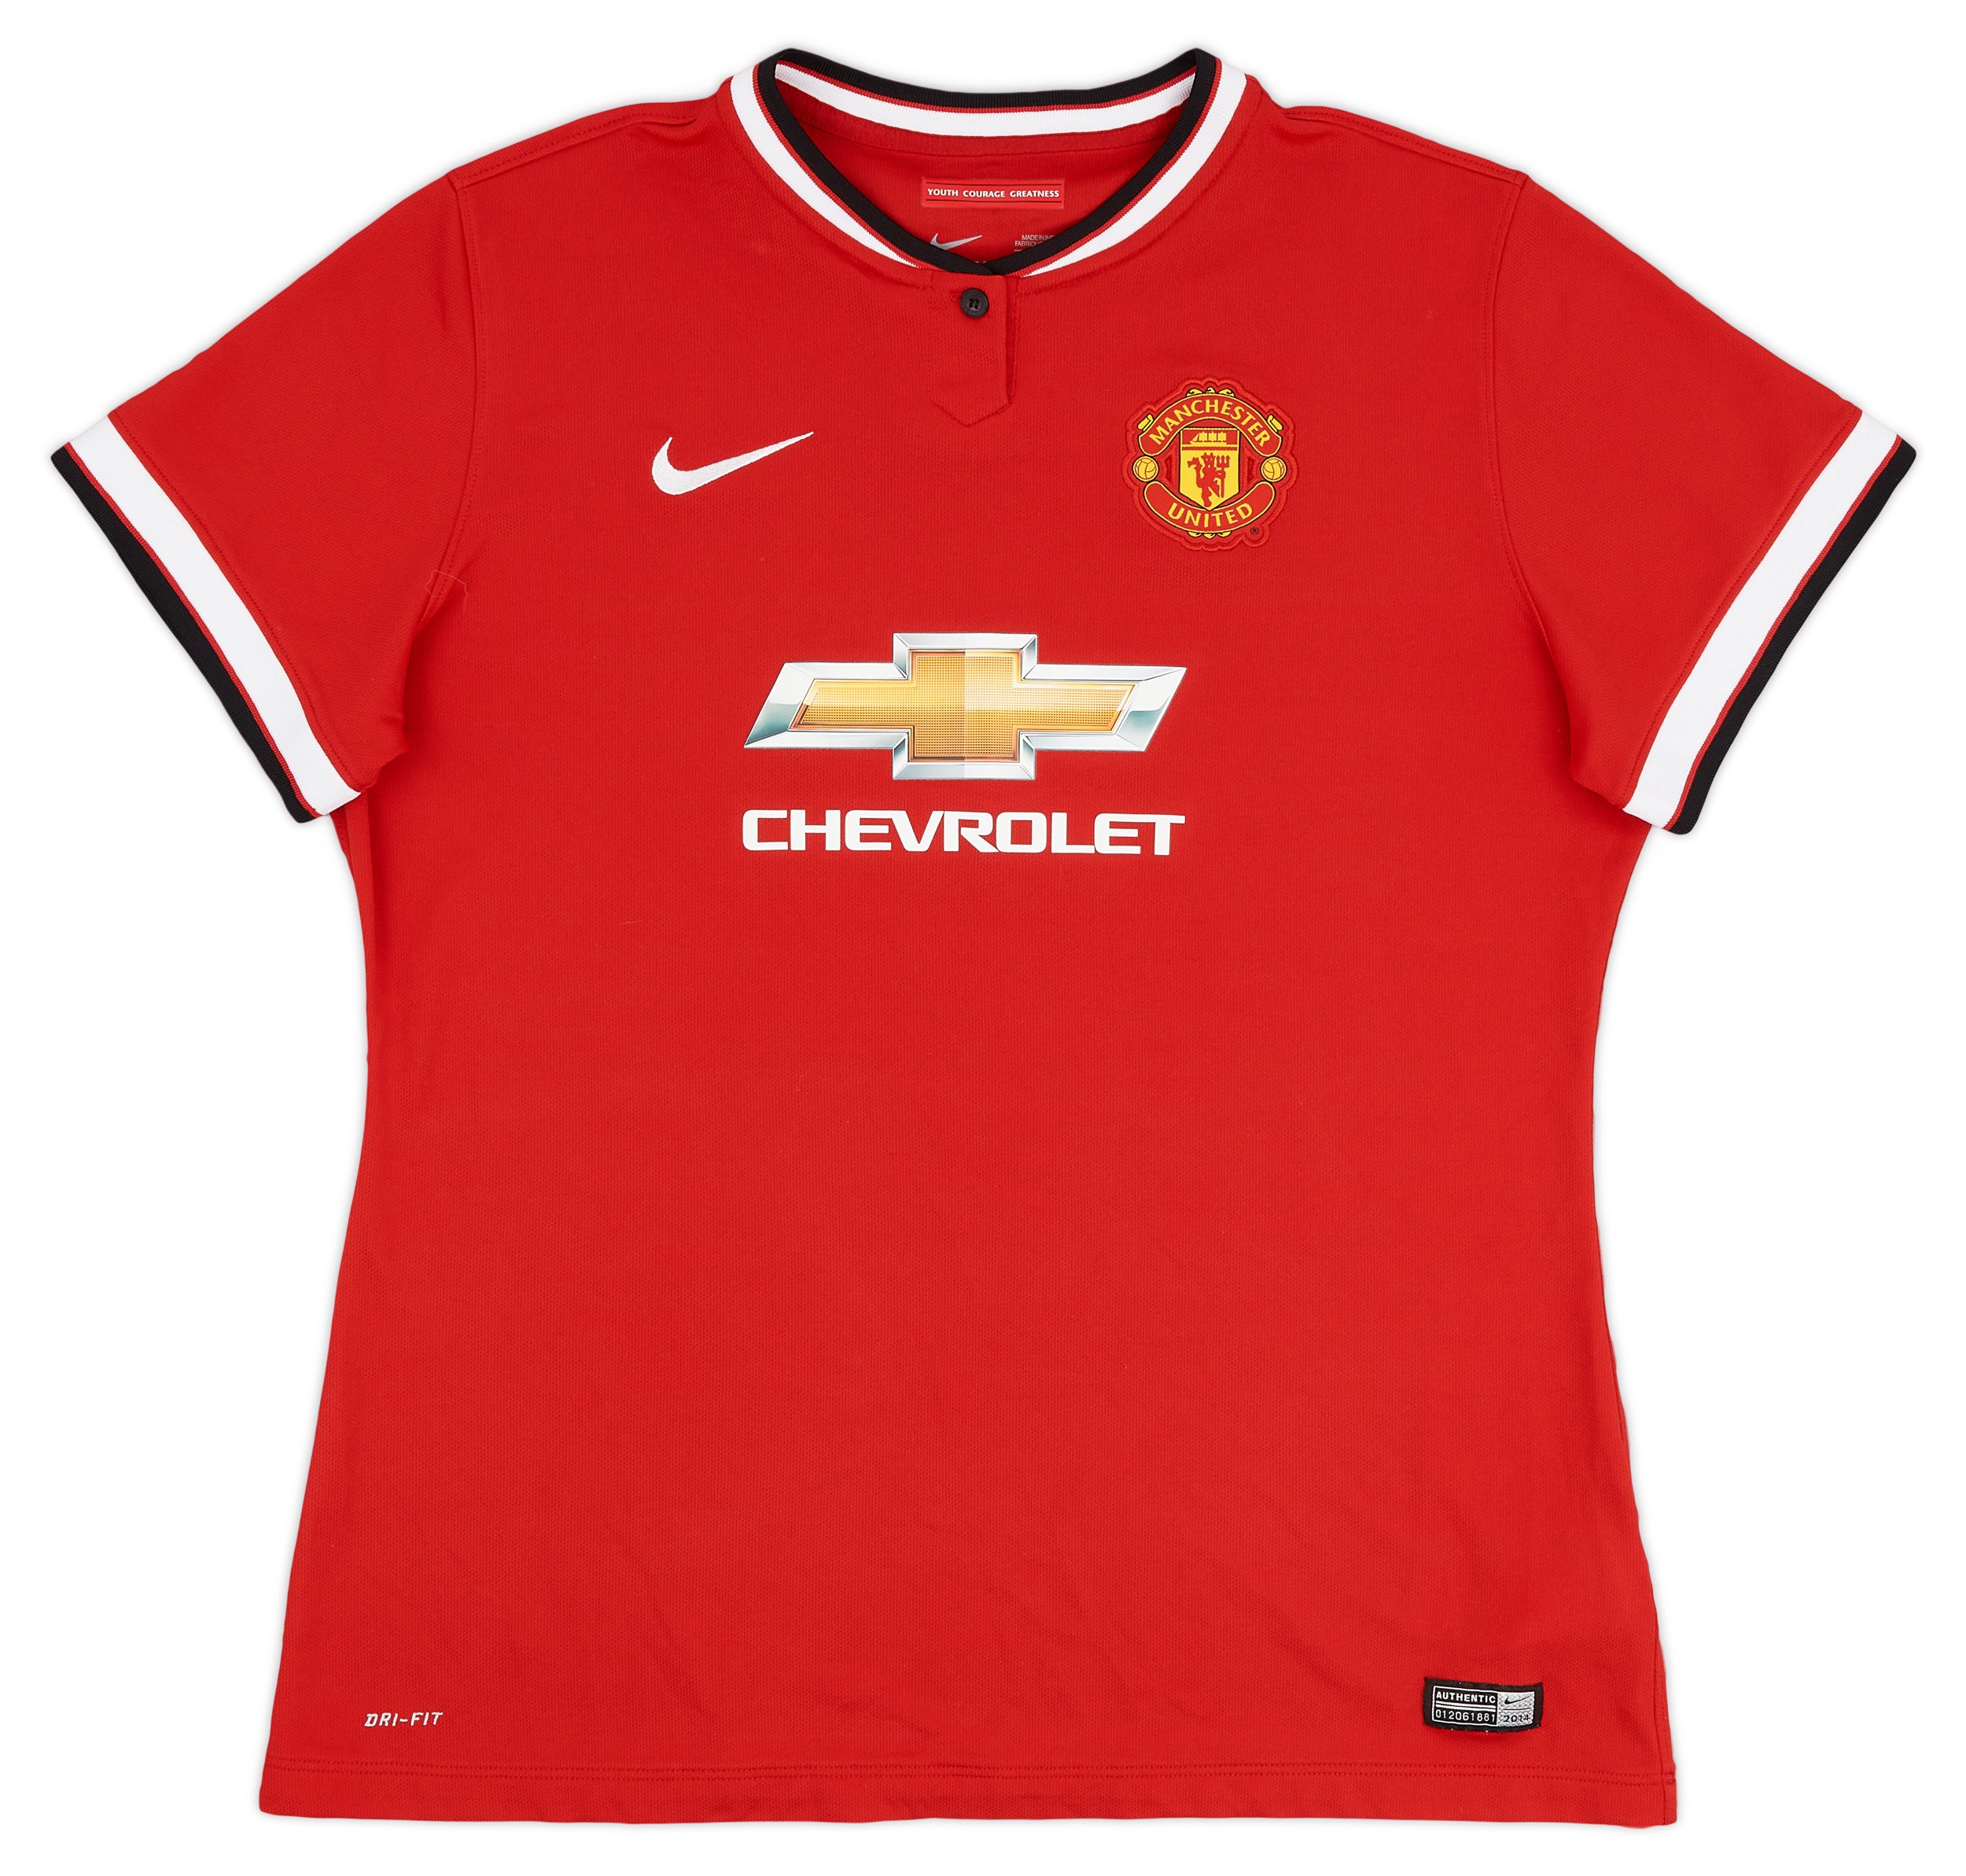 2014-15 Manchester United Home Shirt - 9/10 - (Women's )